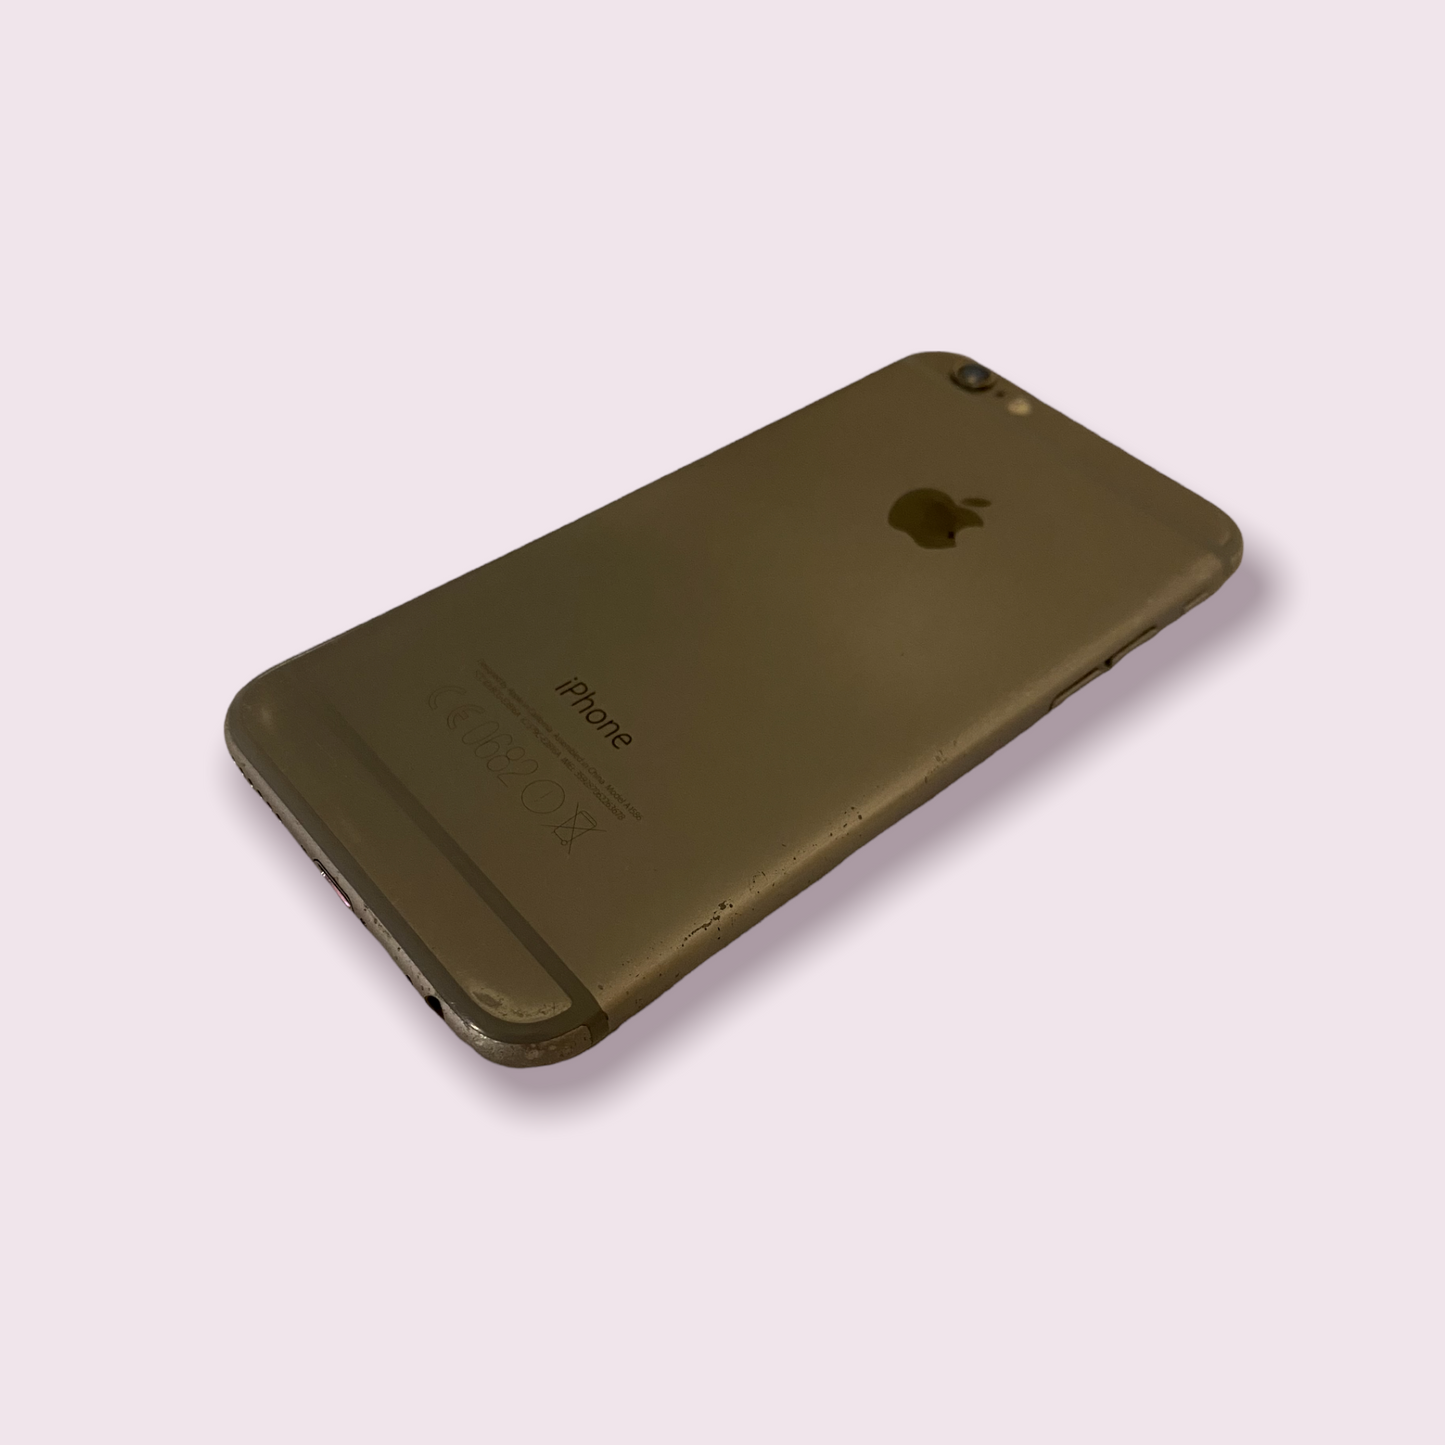 Apple iPhone 6 16GB Space Grey - Unlocked - Grade B